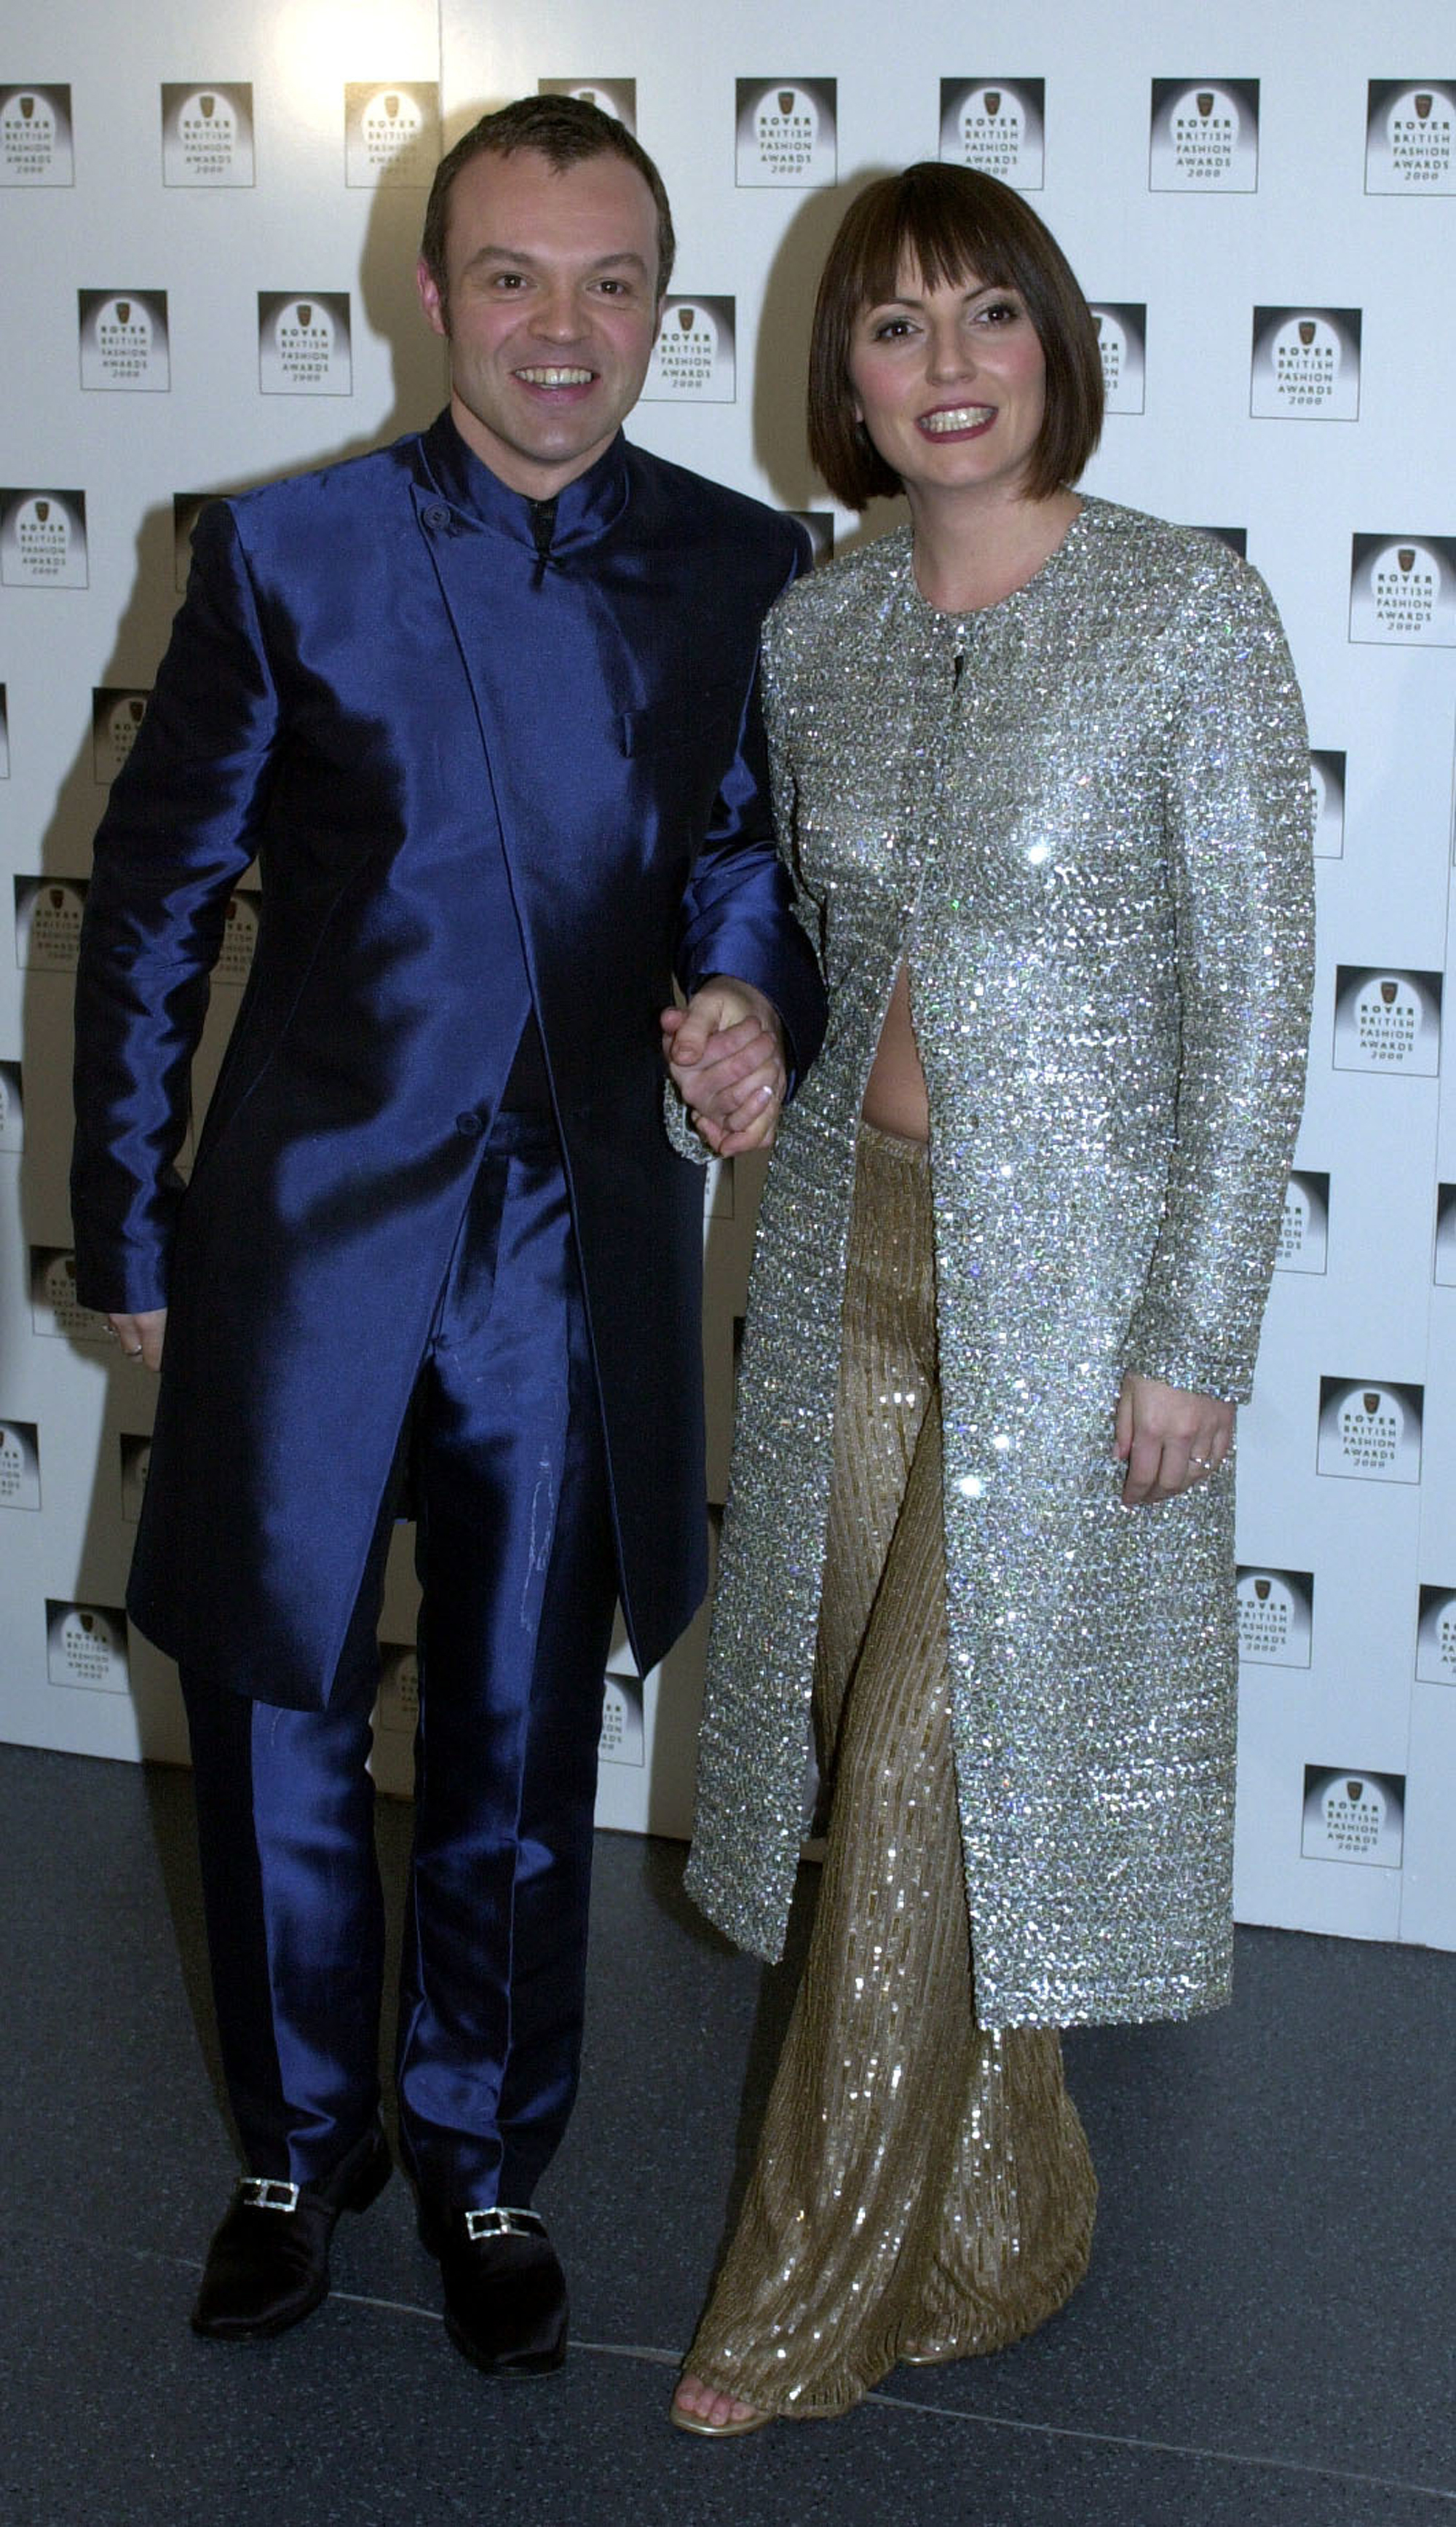 Comedian Graham Norton and television presenter Davina McCall at the Rover British Fashion Awards 2000